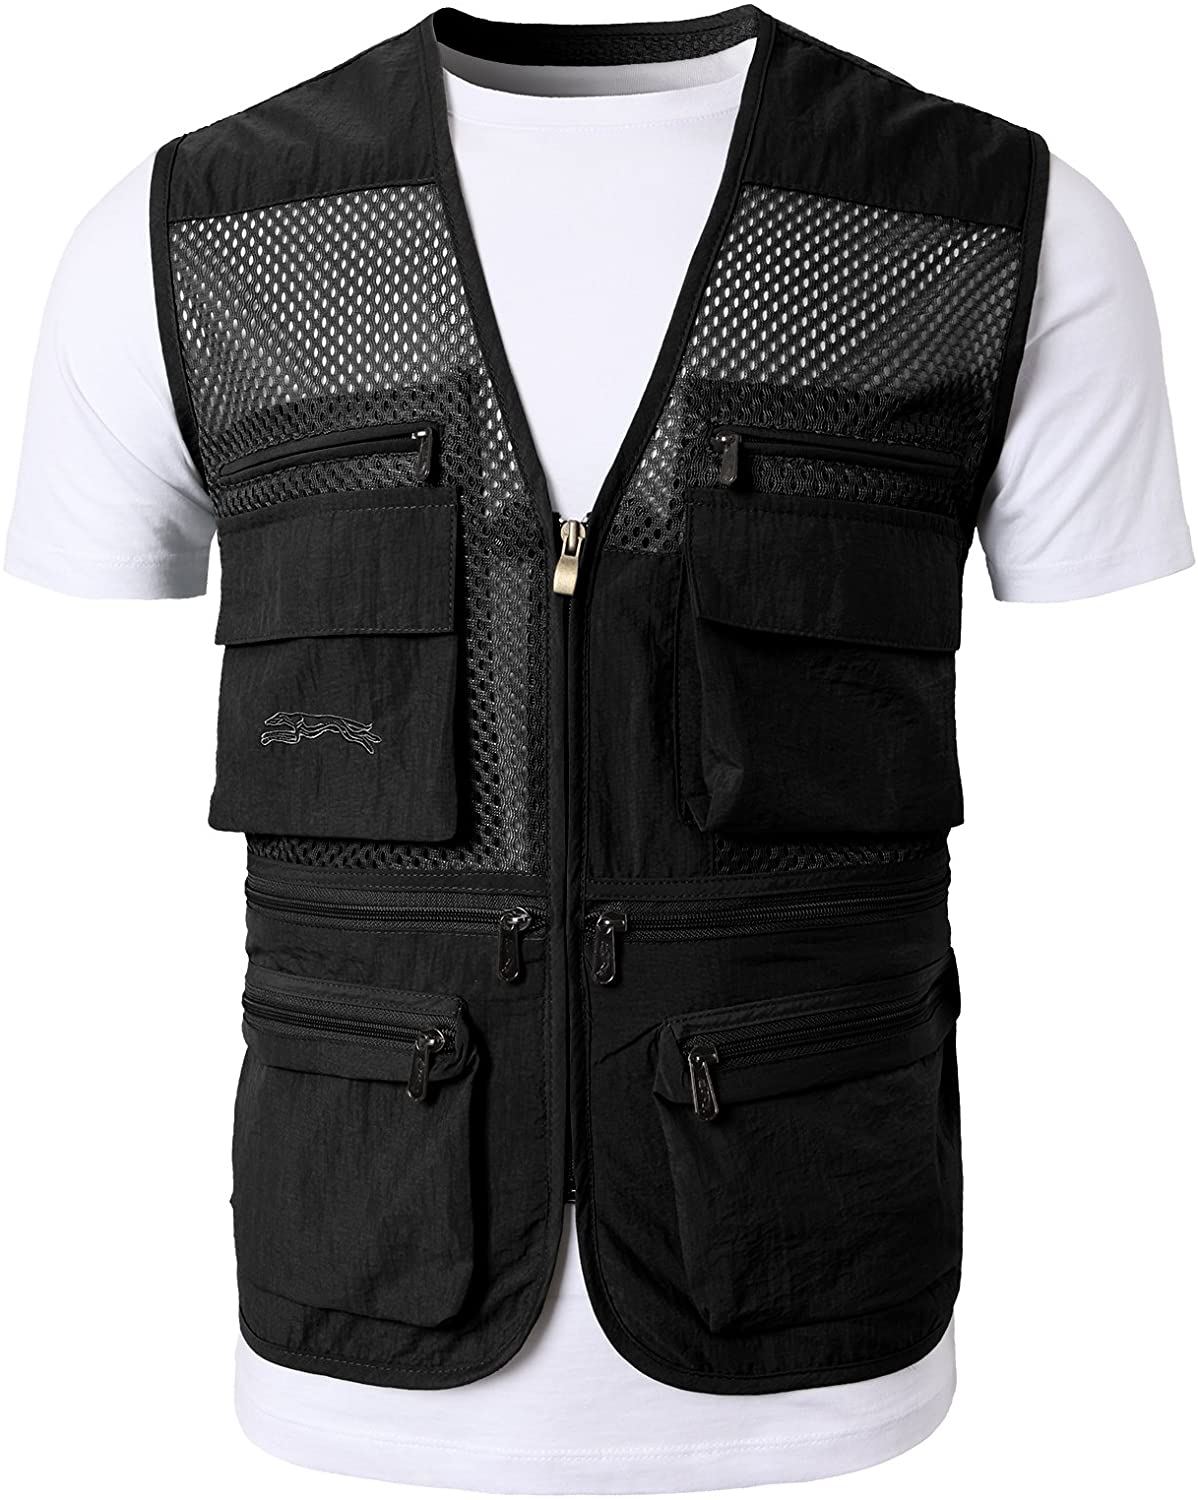 travel vest with many pockets